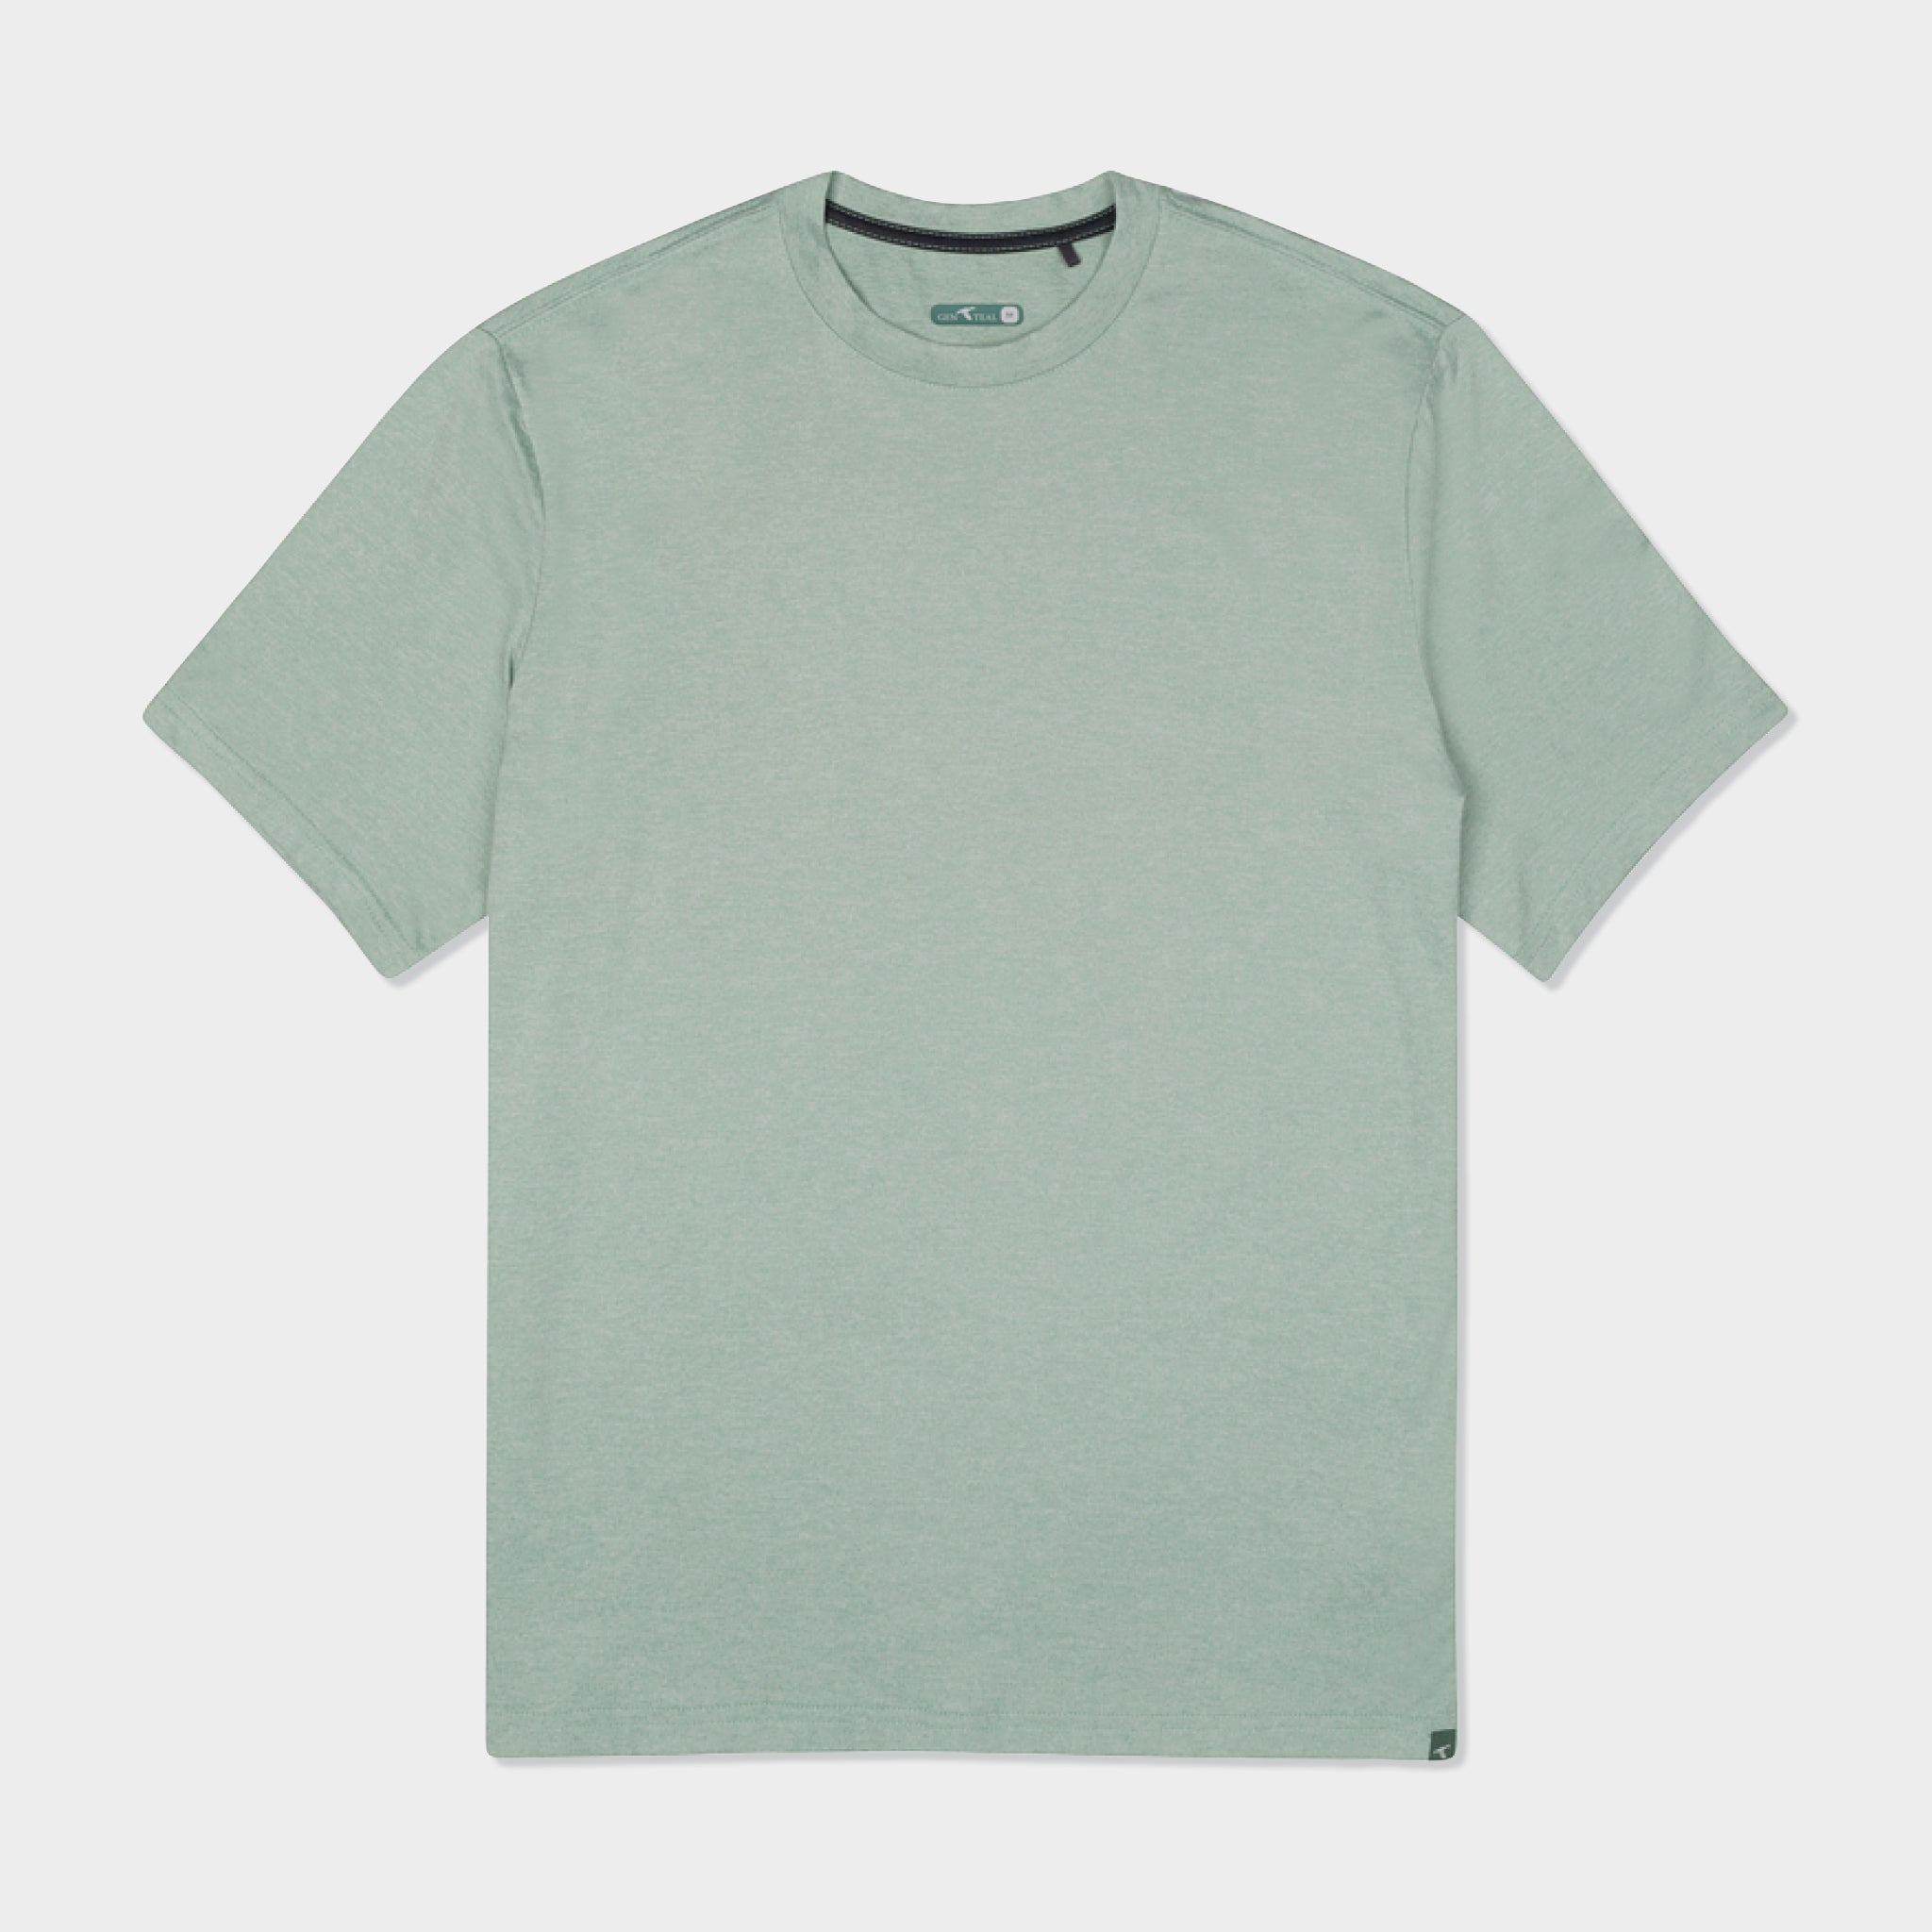 ns heathered green short sleeve t-shirt